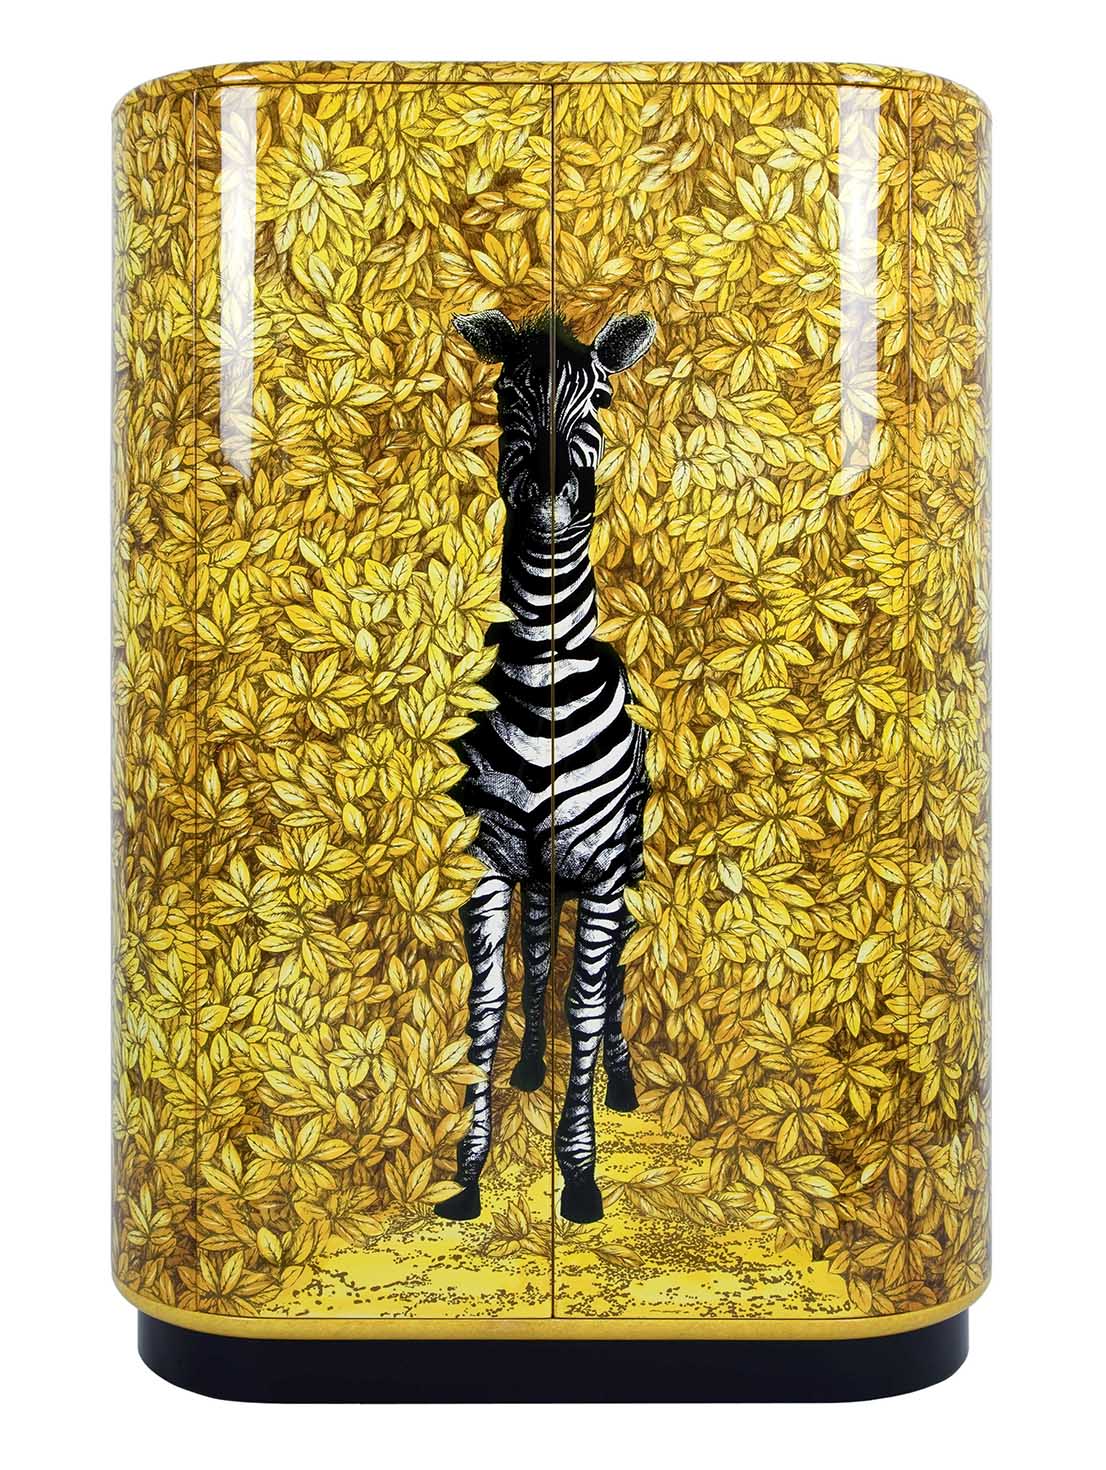 Zebra, design by Barnaba Fornasetti, 2003.